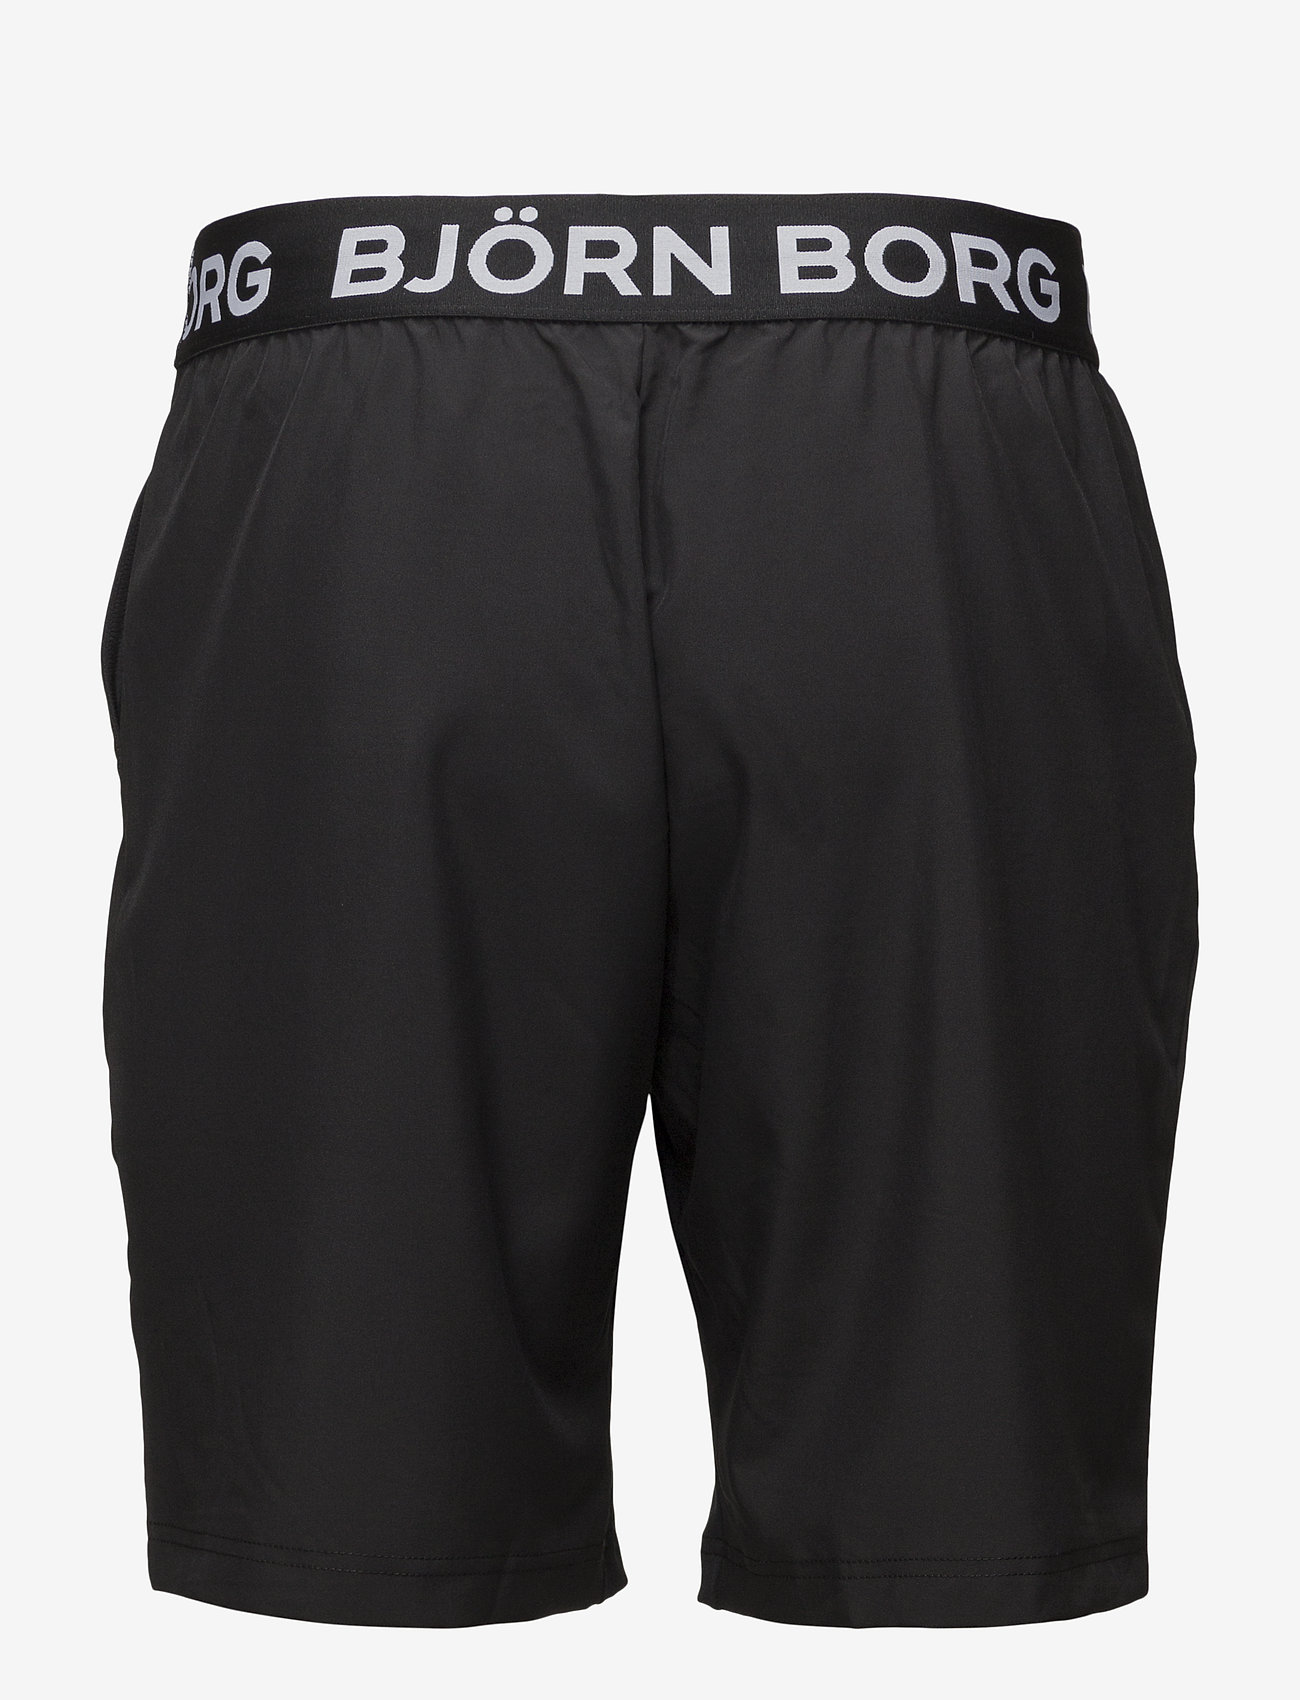 Björn Borg - BORG SHORTS - sportsshorts - black beauty - 1